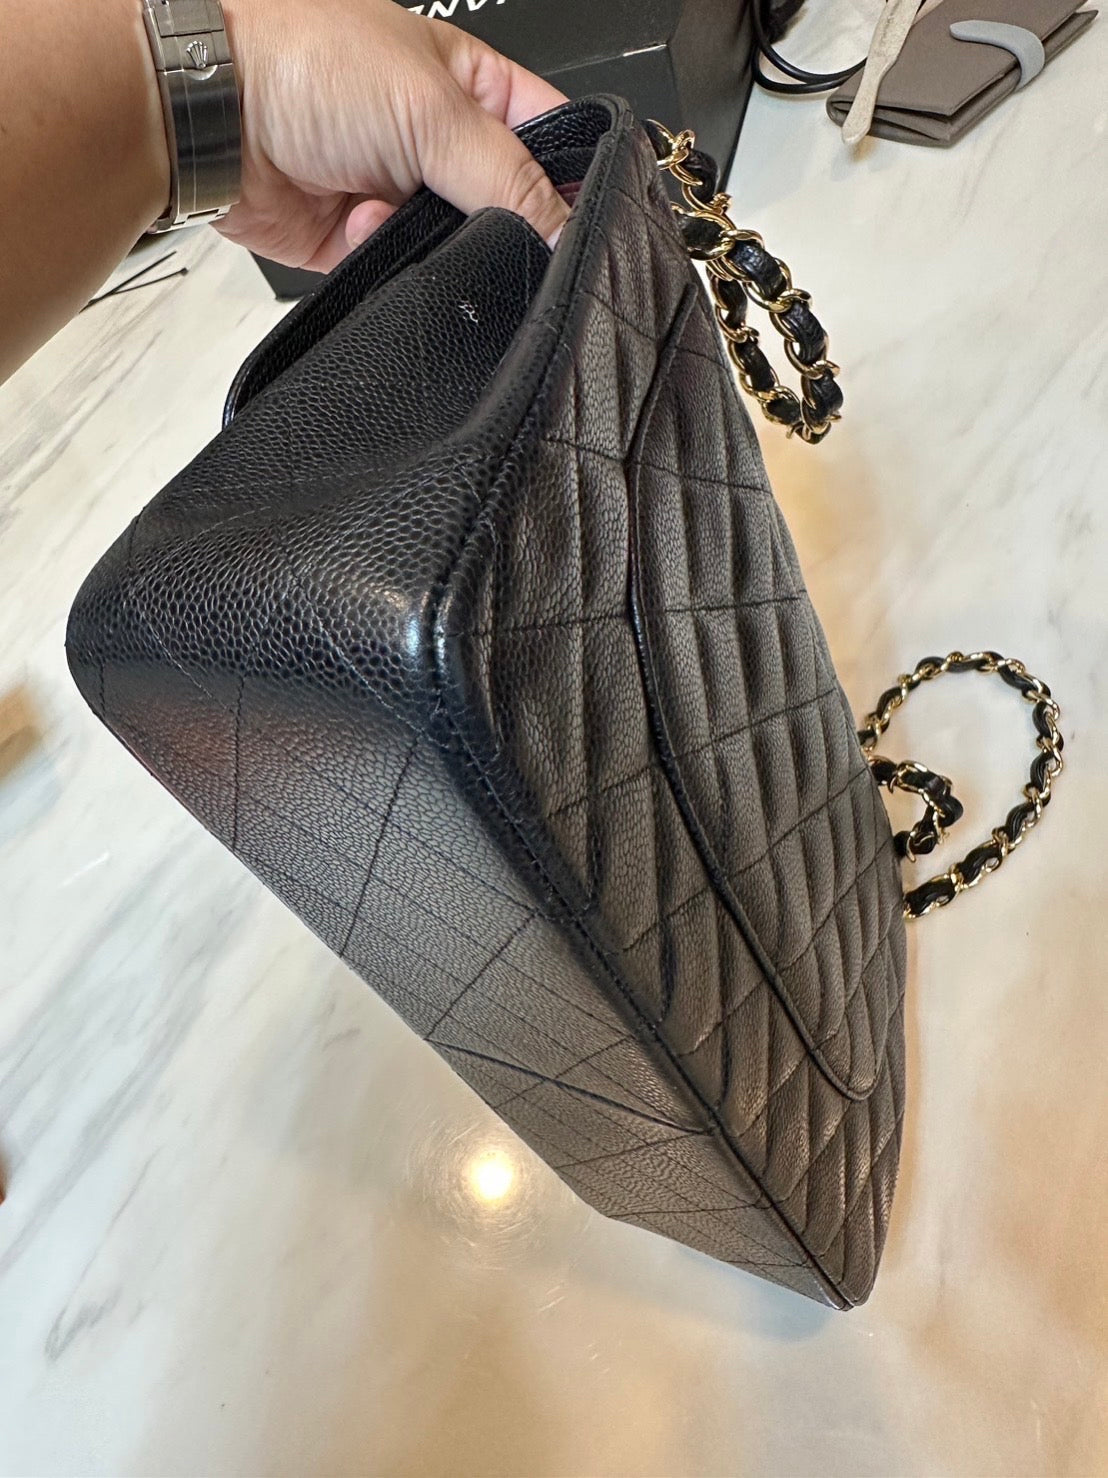 Chanel Jumbo Black Calfskin Caviar Double Flap Bag with GHW Chanel | The  Luxury Closet